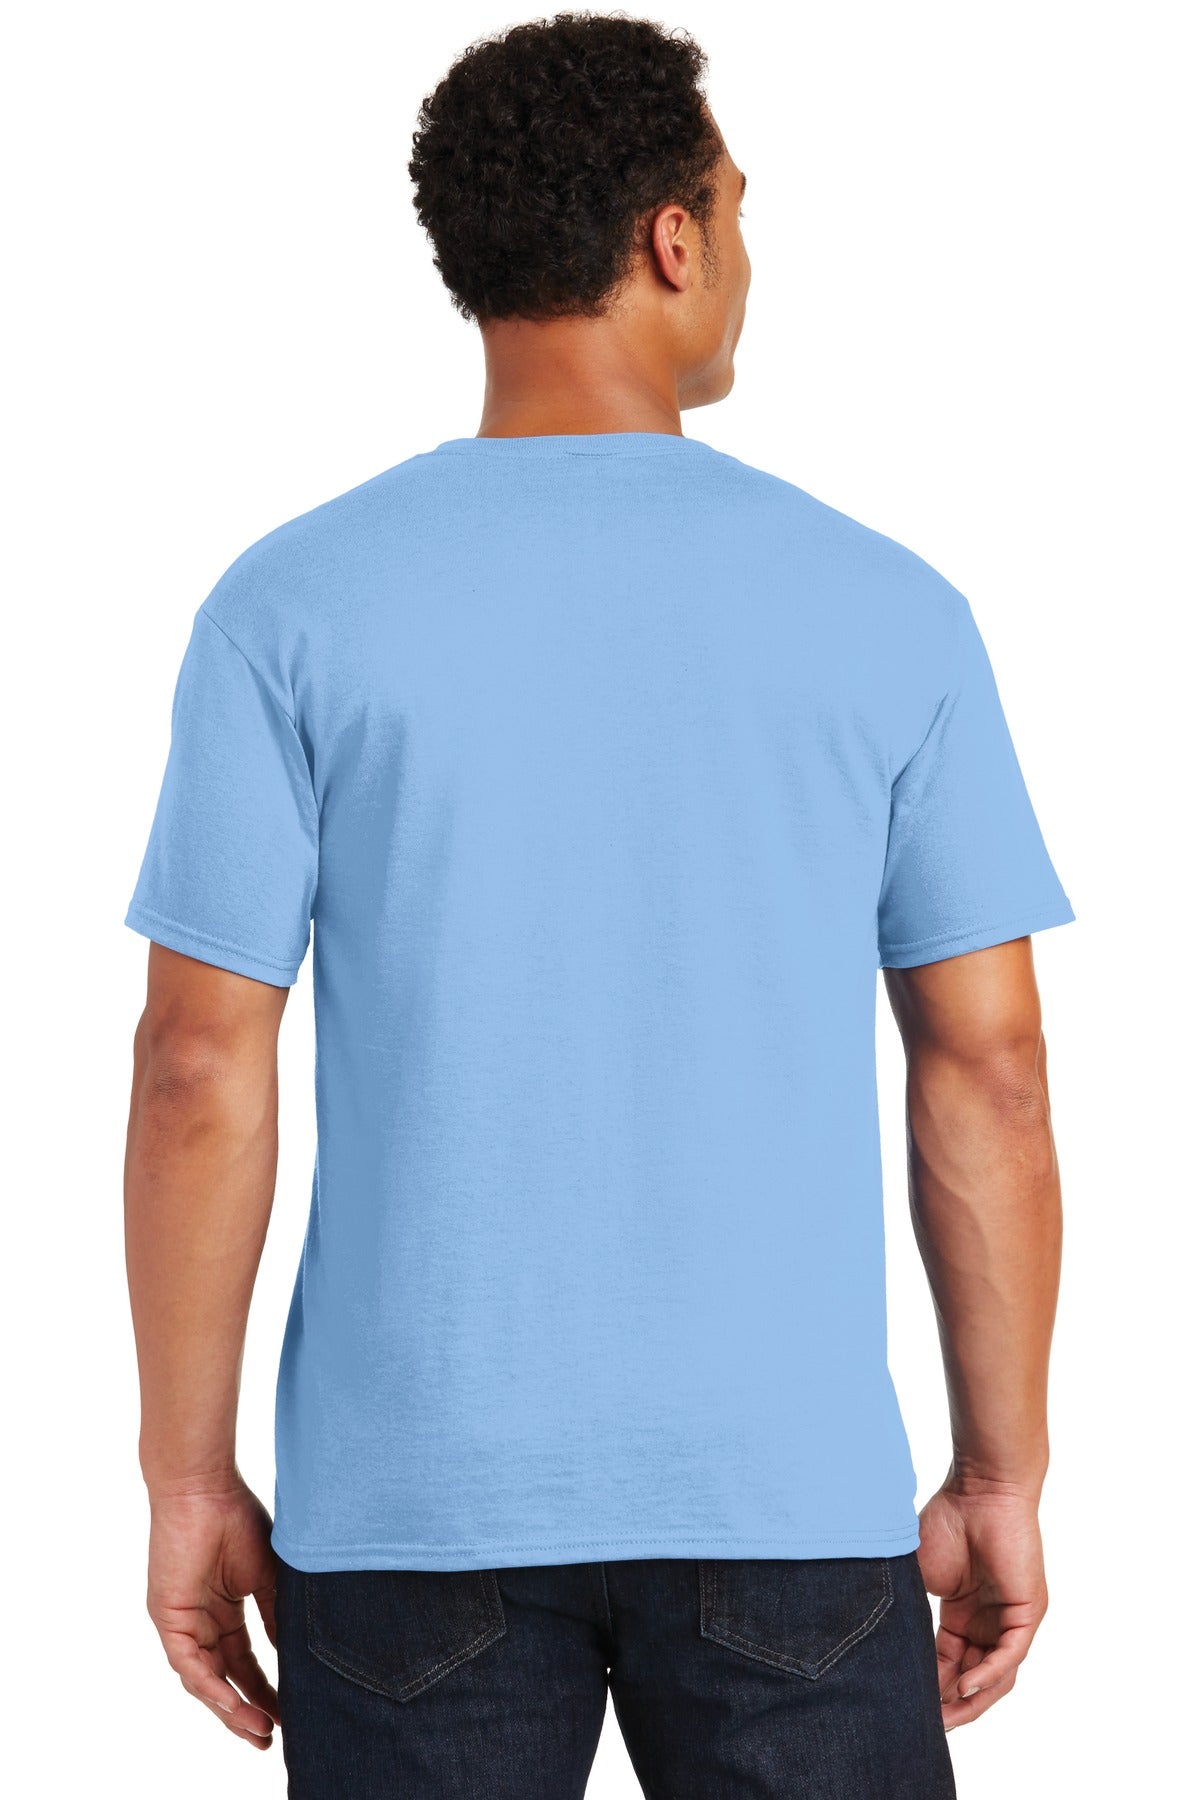 JERZEES® - Dri-Power® 50/50 Cotton/Poly T-Shirt. 29M [Light Blue] - DFW Impression